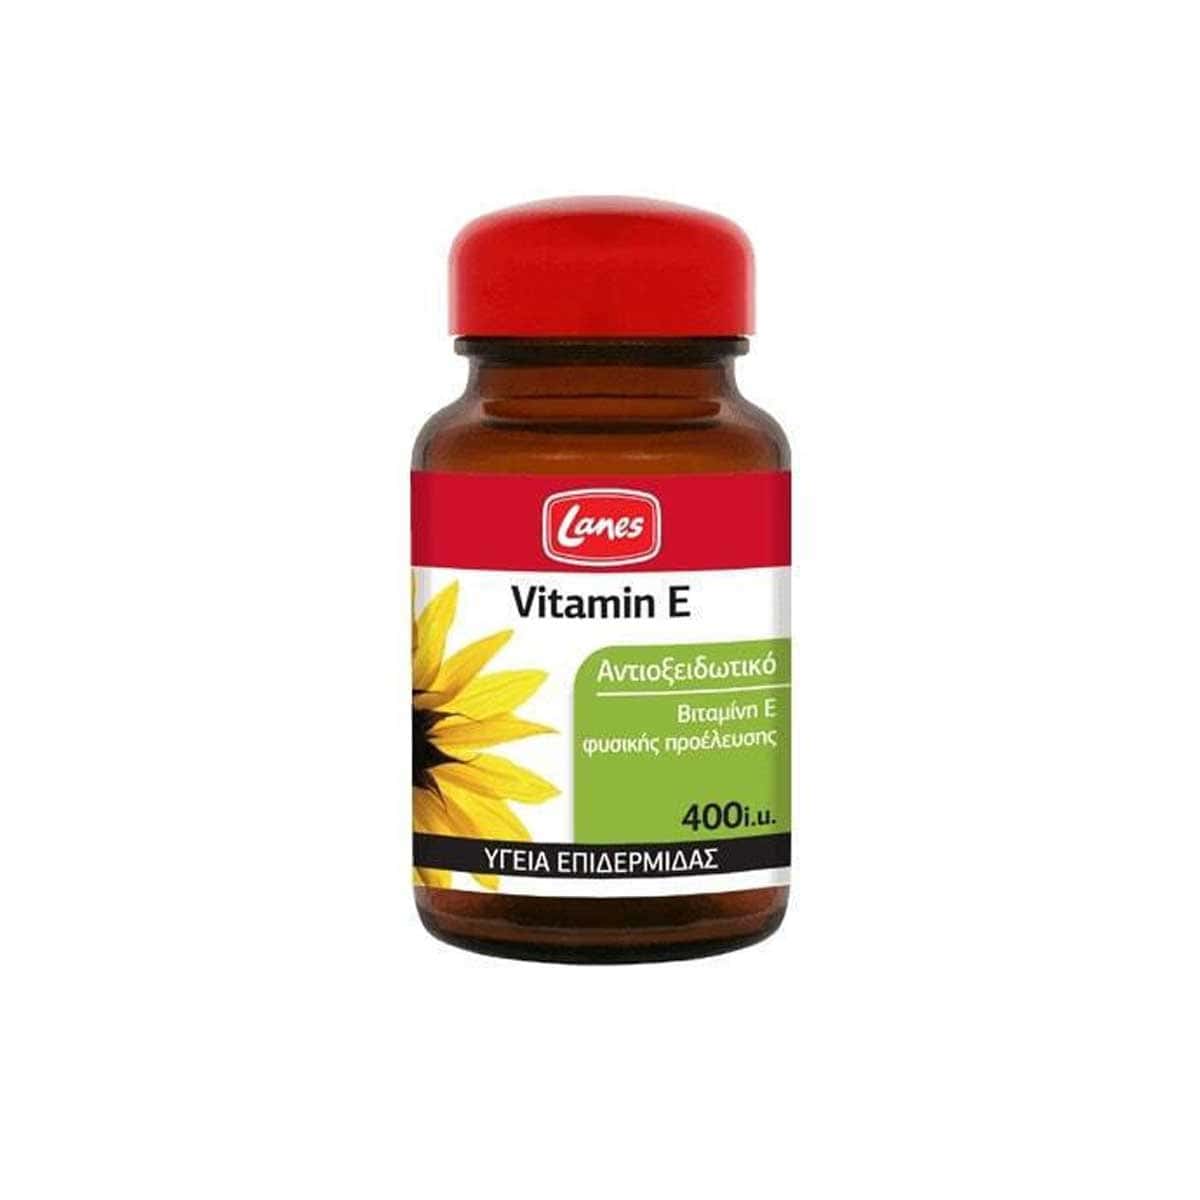 Lanes-Vitamin-E-400iu-268mg-30-kapsoules-5201314168331